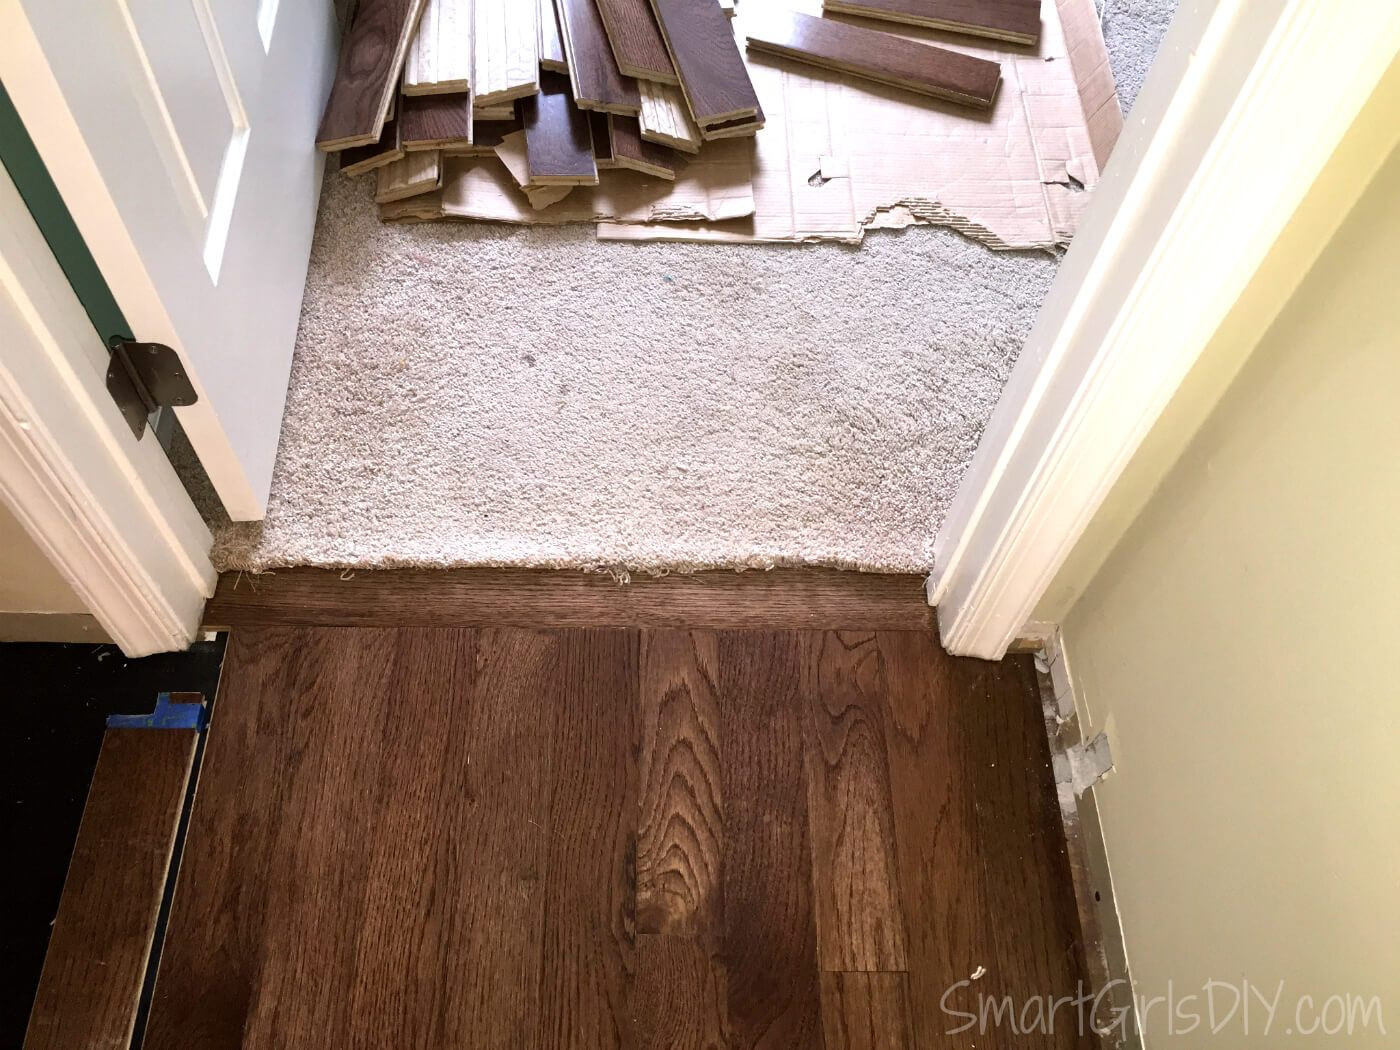 avg cost of hardwood flooring installed of upstairs hallway 1 installing hardwood floors throughout transition between carpet and hardwood floor